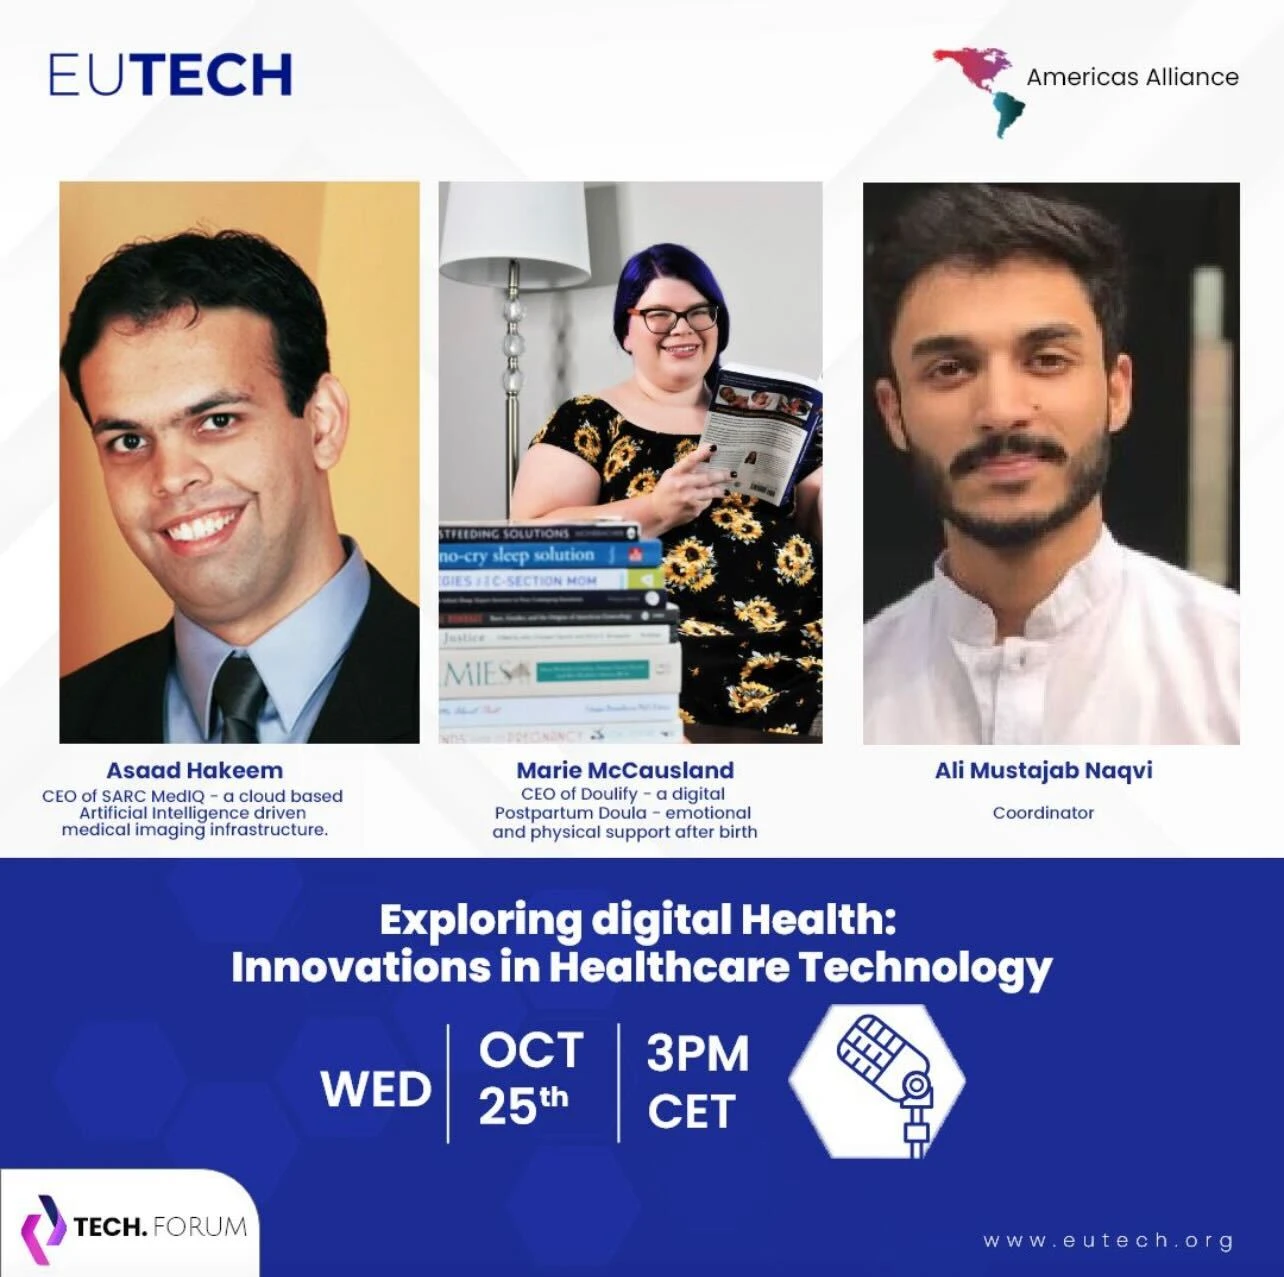 Asaad Hakeem shared his insights at eutech webinar Exploring Digital Health: Innovations in Healthcare Technology